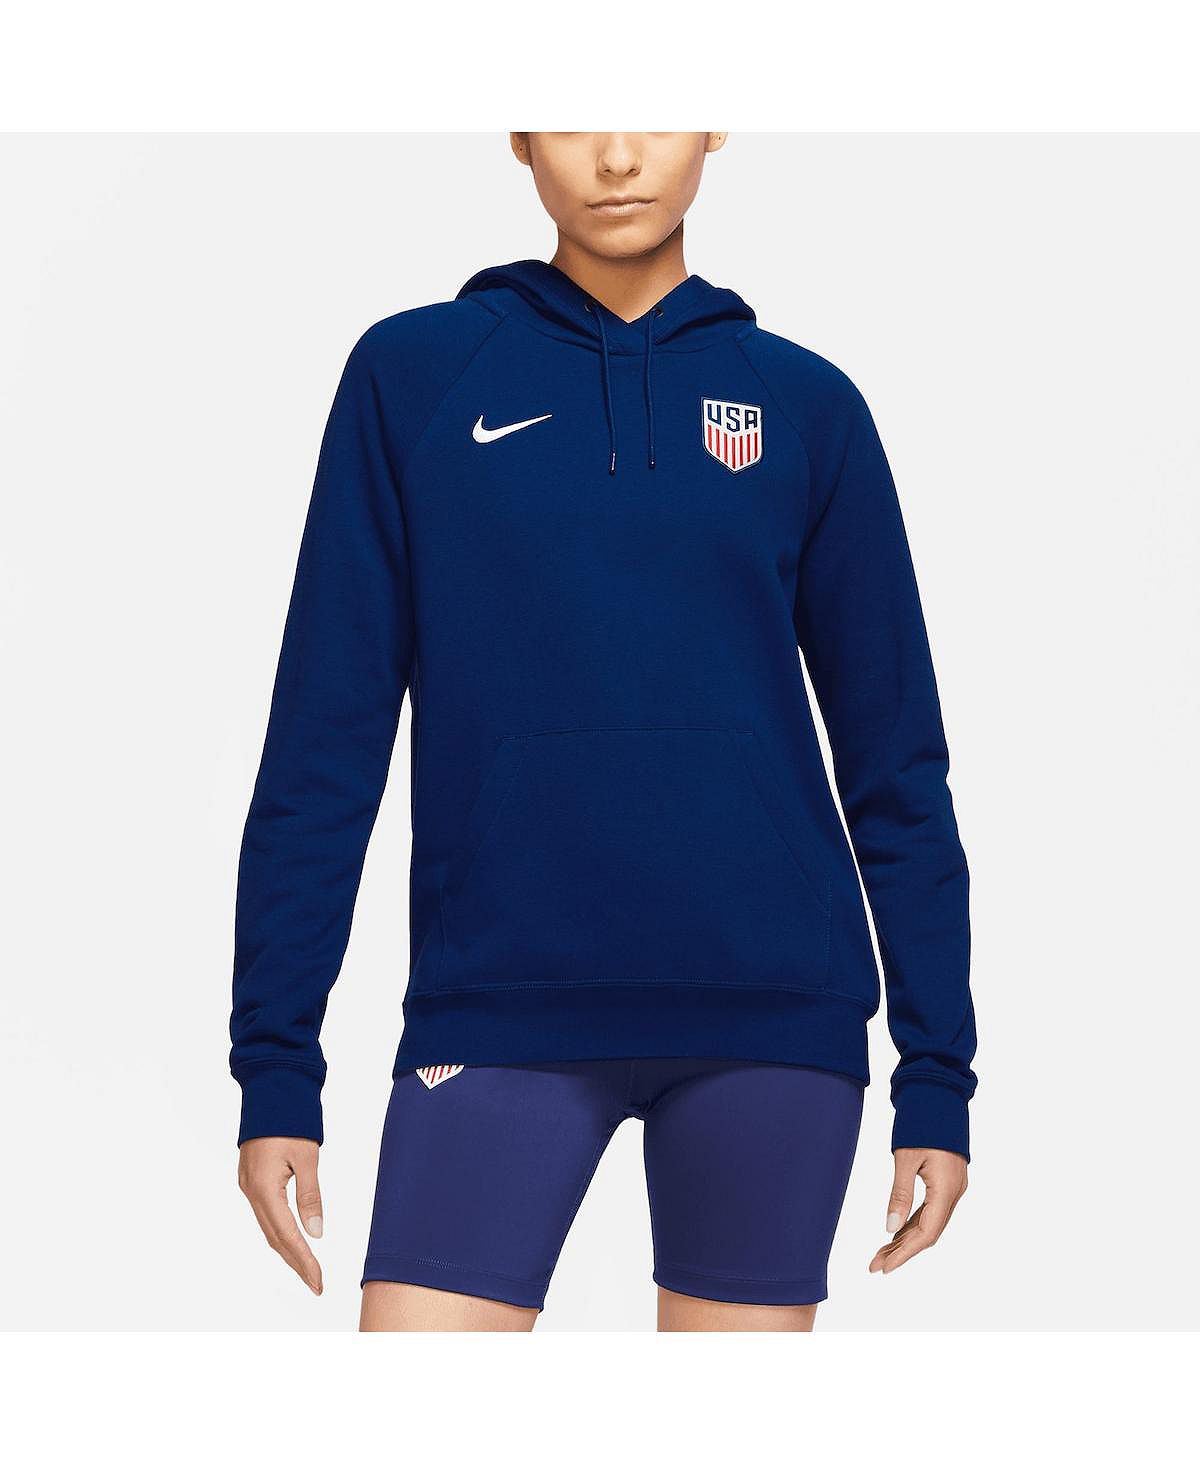 Женский темно-синий пуловер с капюшоном USMNT Essential реглан Nike, темно-синий